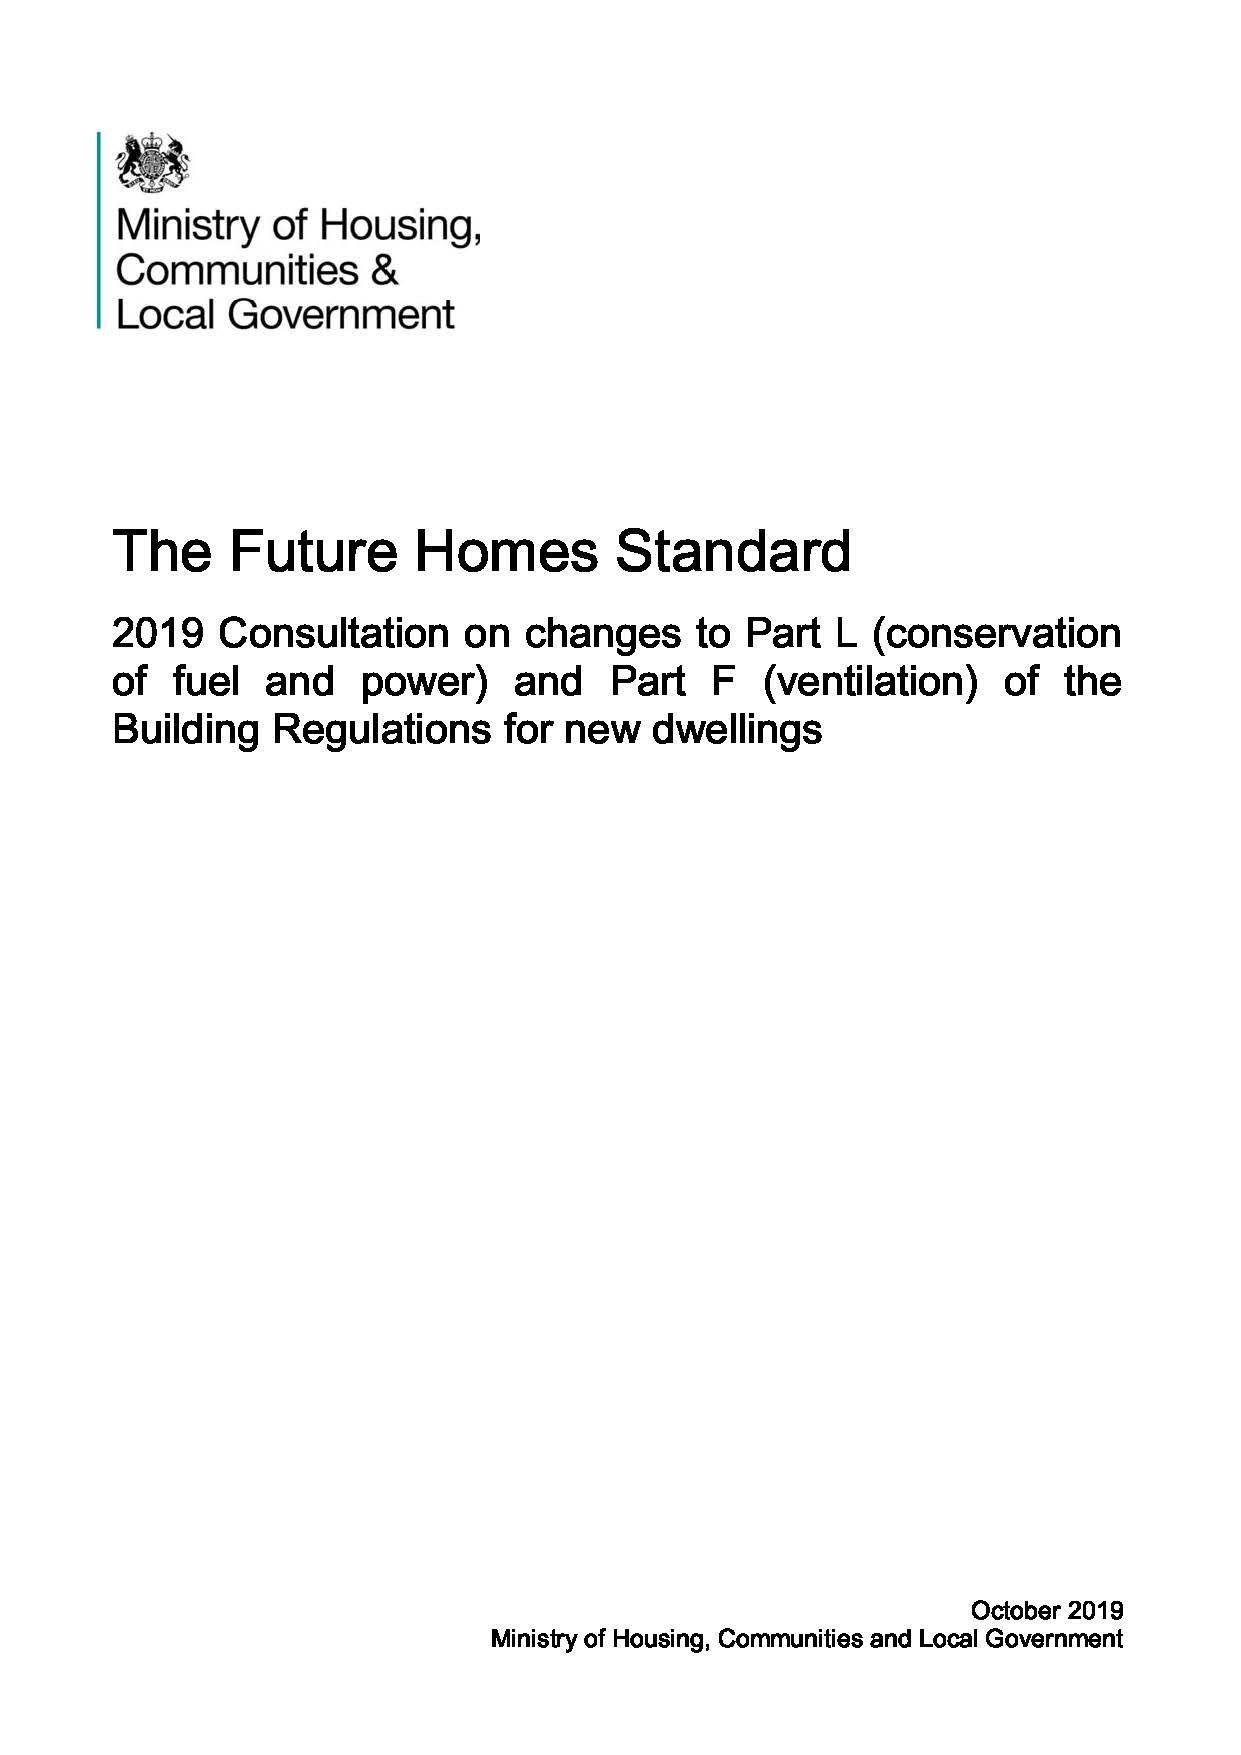 The Future Homes Standard Consultation